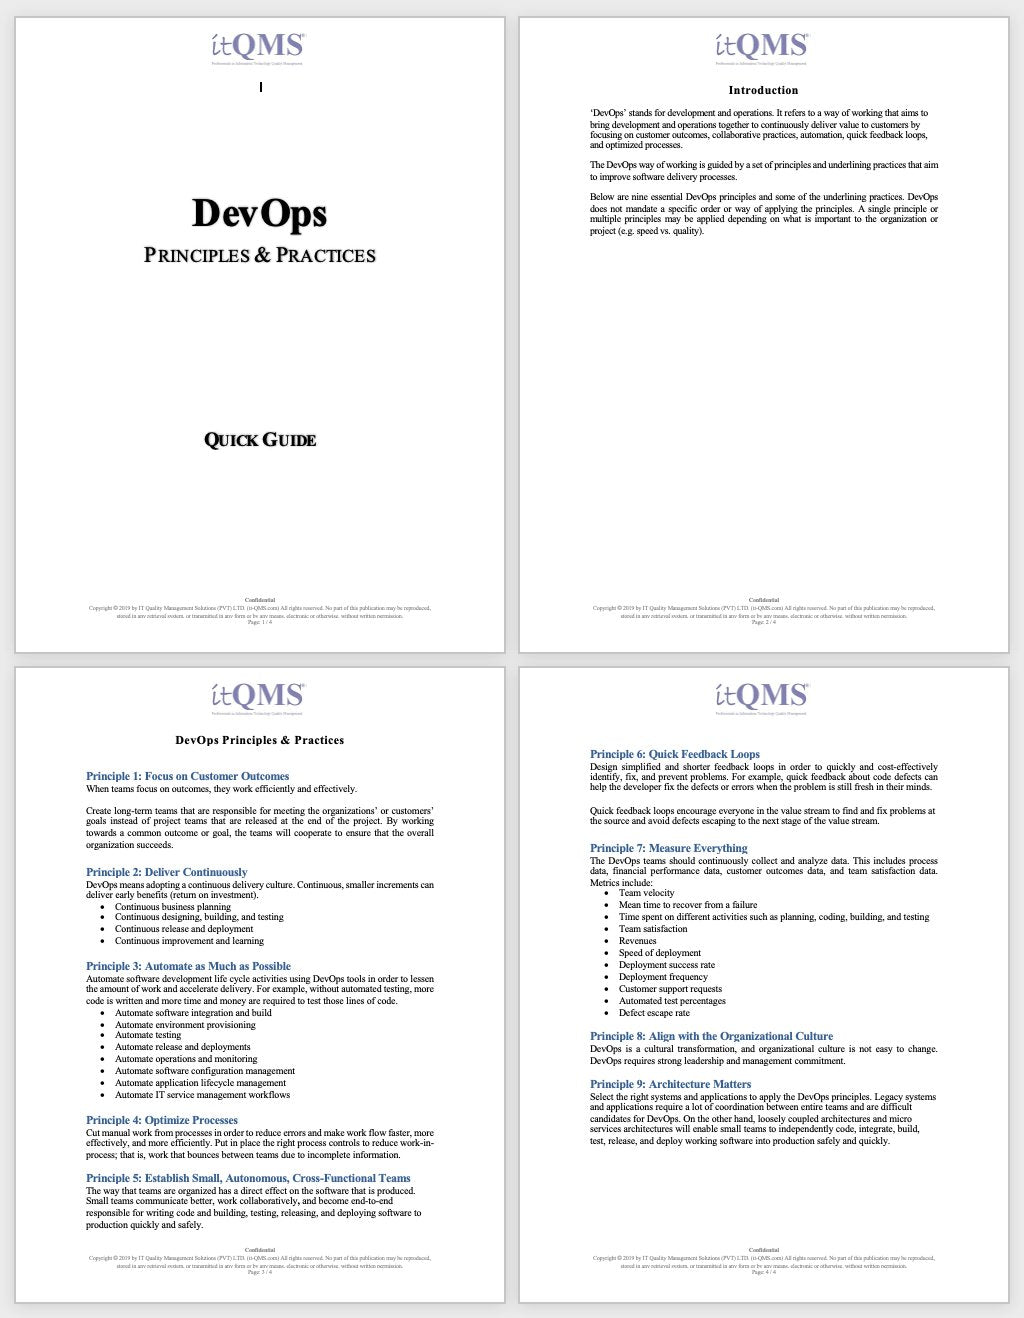 DevOps and Software Development Process Templates - itQMS - Begin Your Cloud Migration Journey